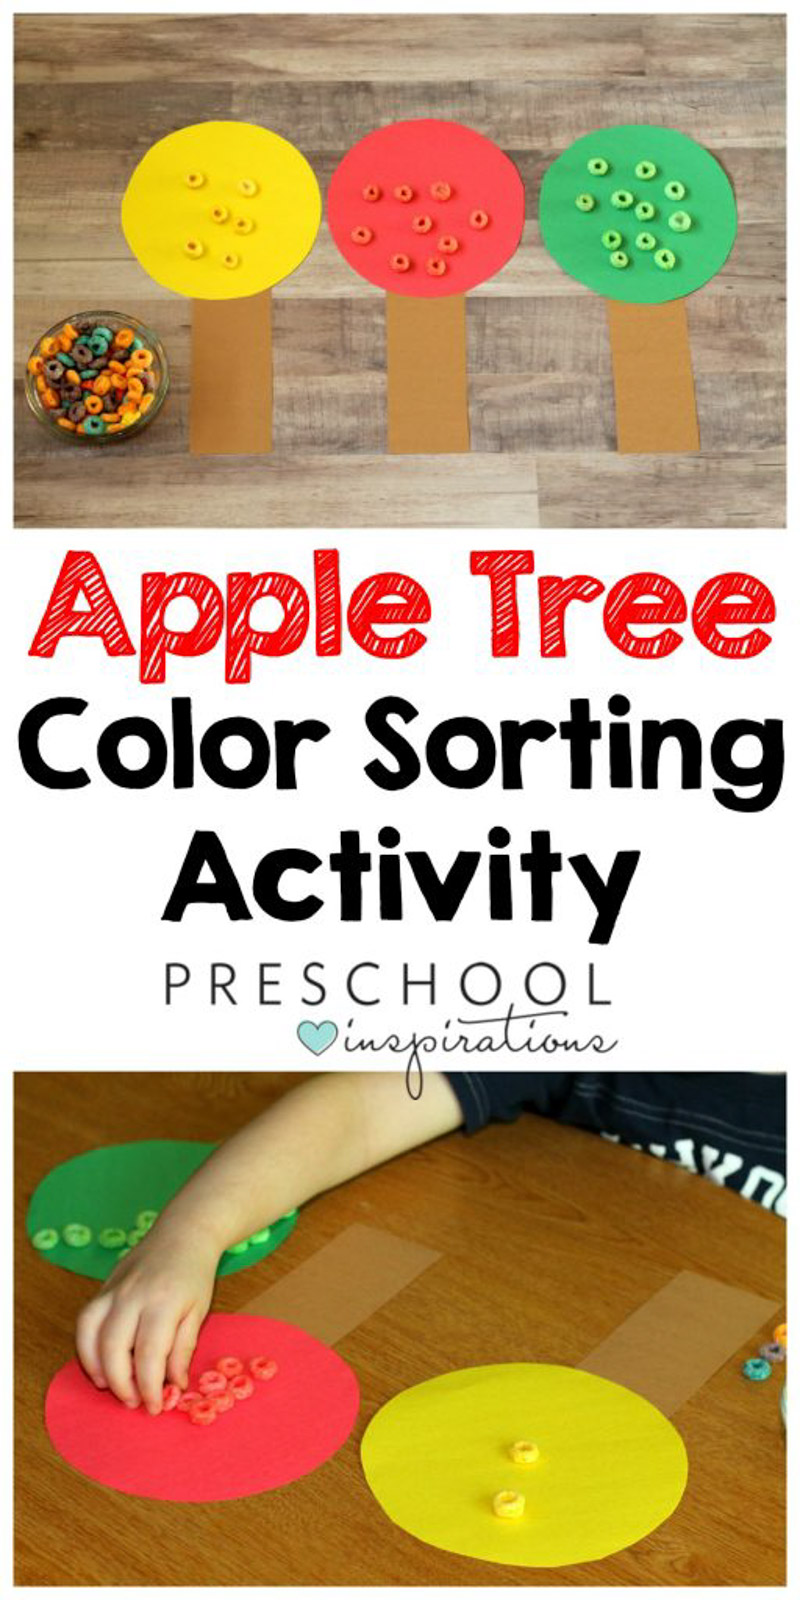 Color Sorting Preschool Apple Activity fine motor practice #preschool #preschoolactivities #preschoolinspirations #finemotor #colors #toddlers  #toddleractivities #preschoolinspirations